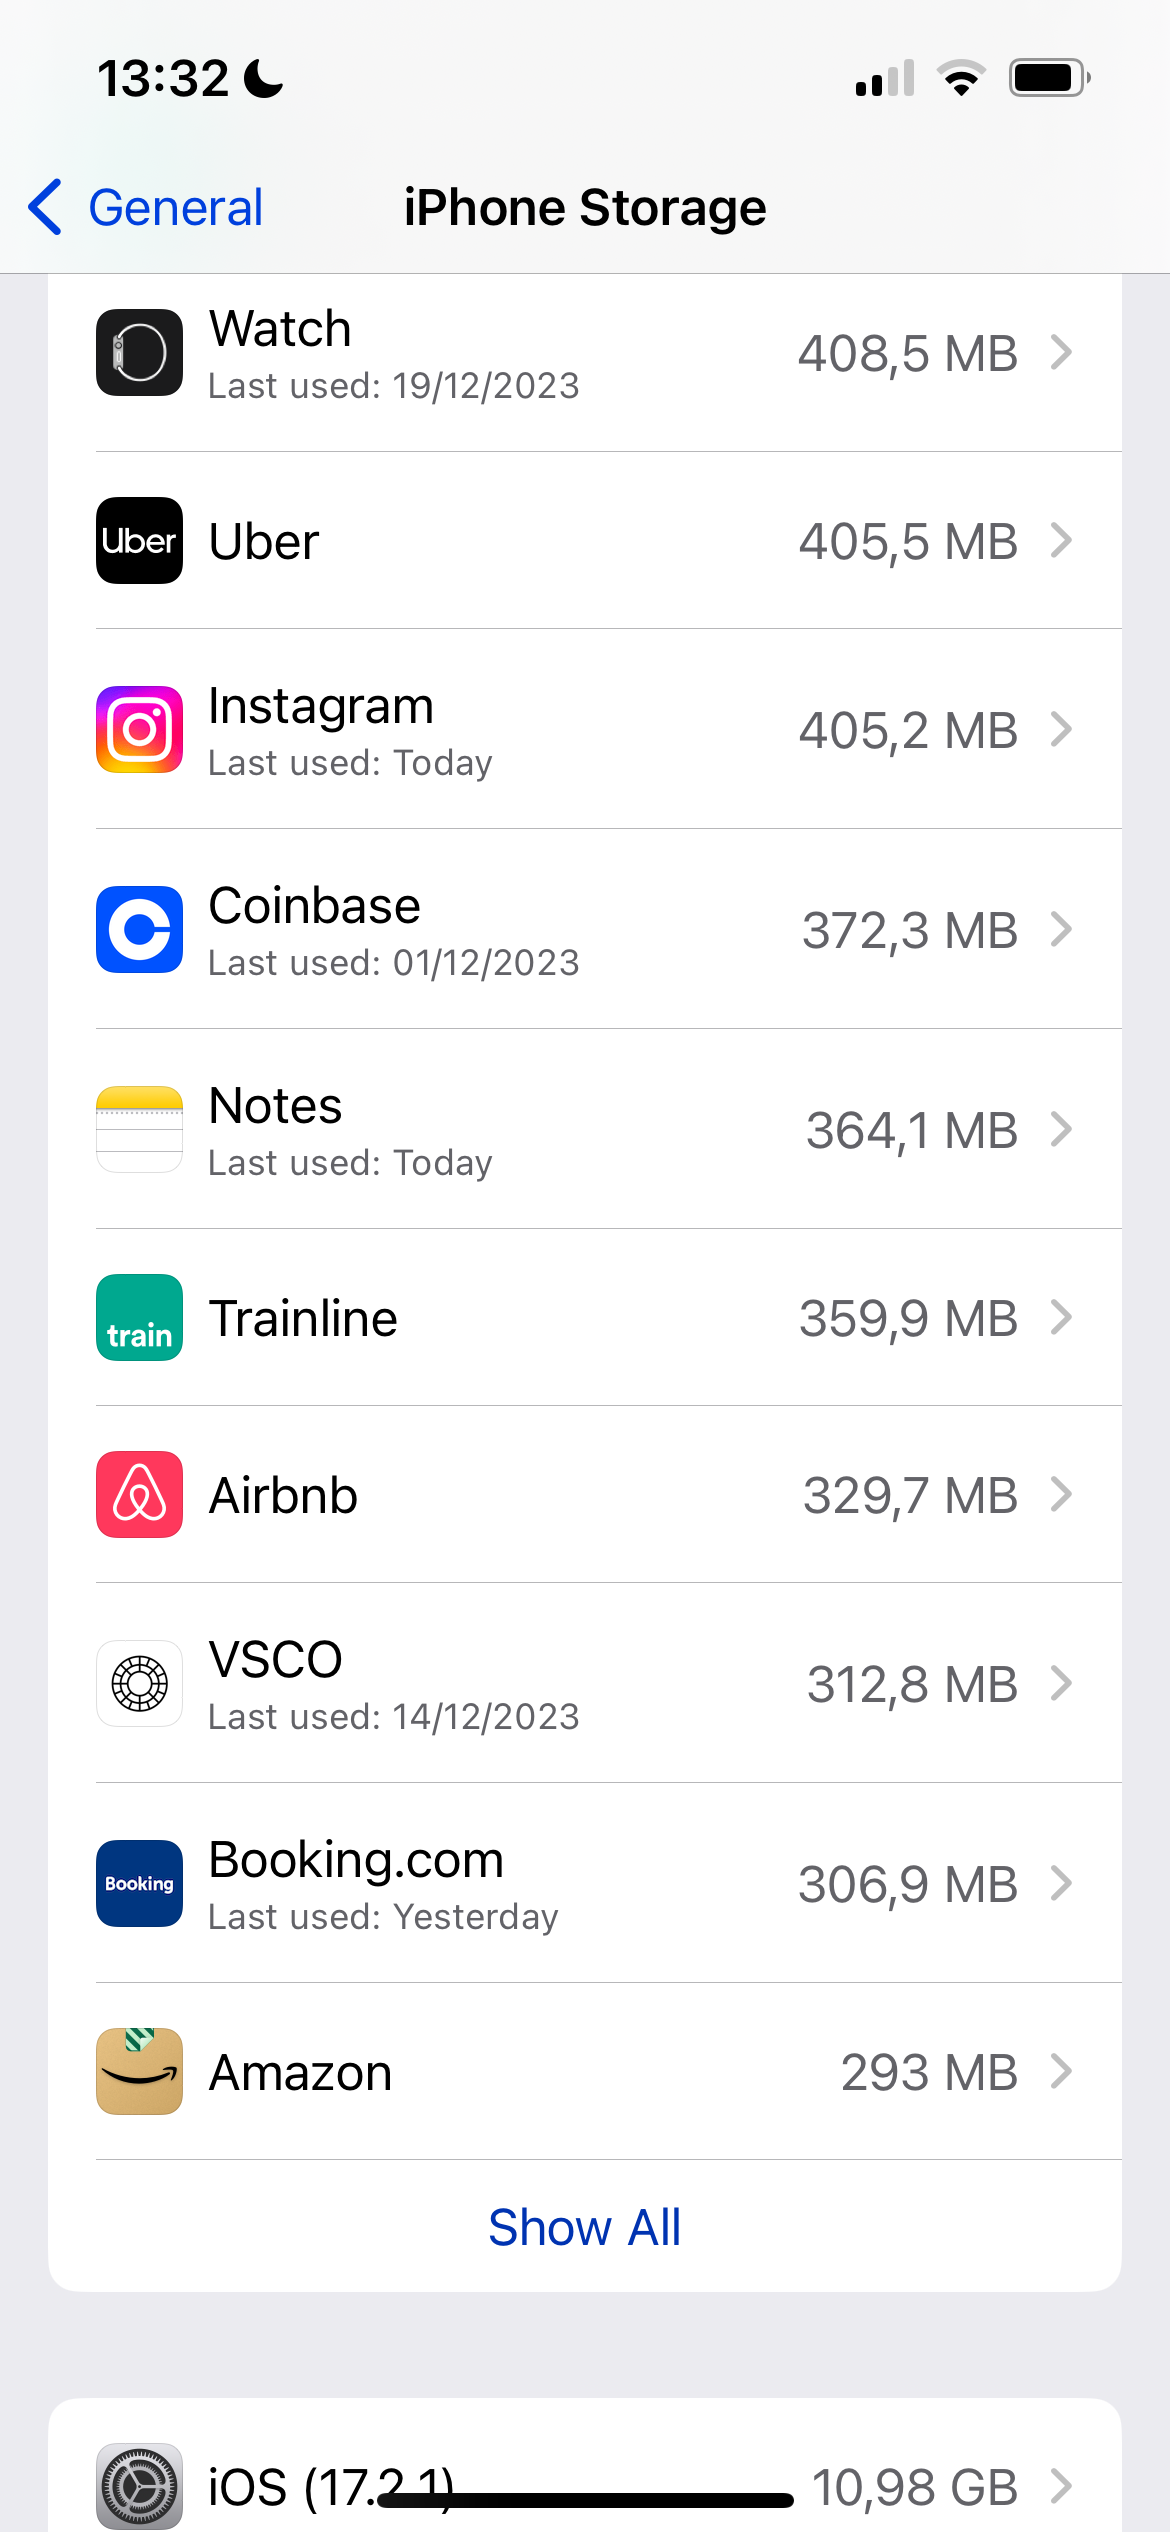 Instagram in iPhone Storage in iOS 17